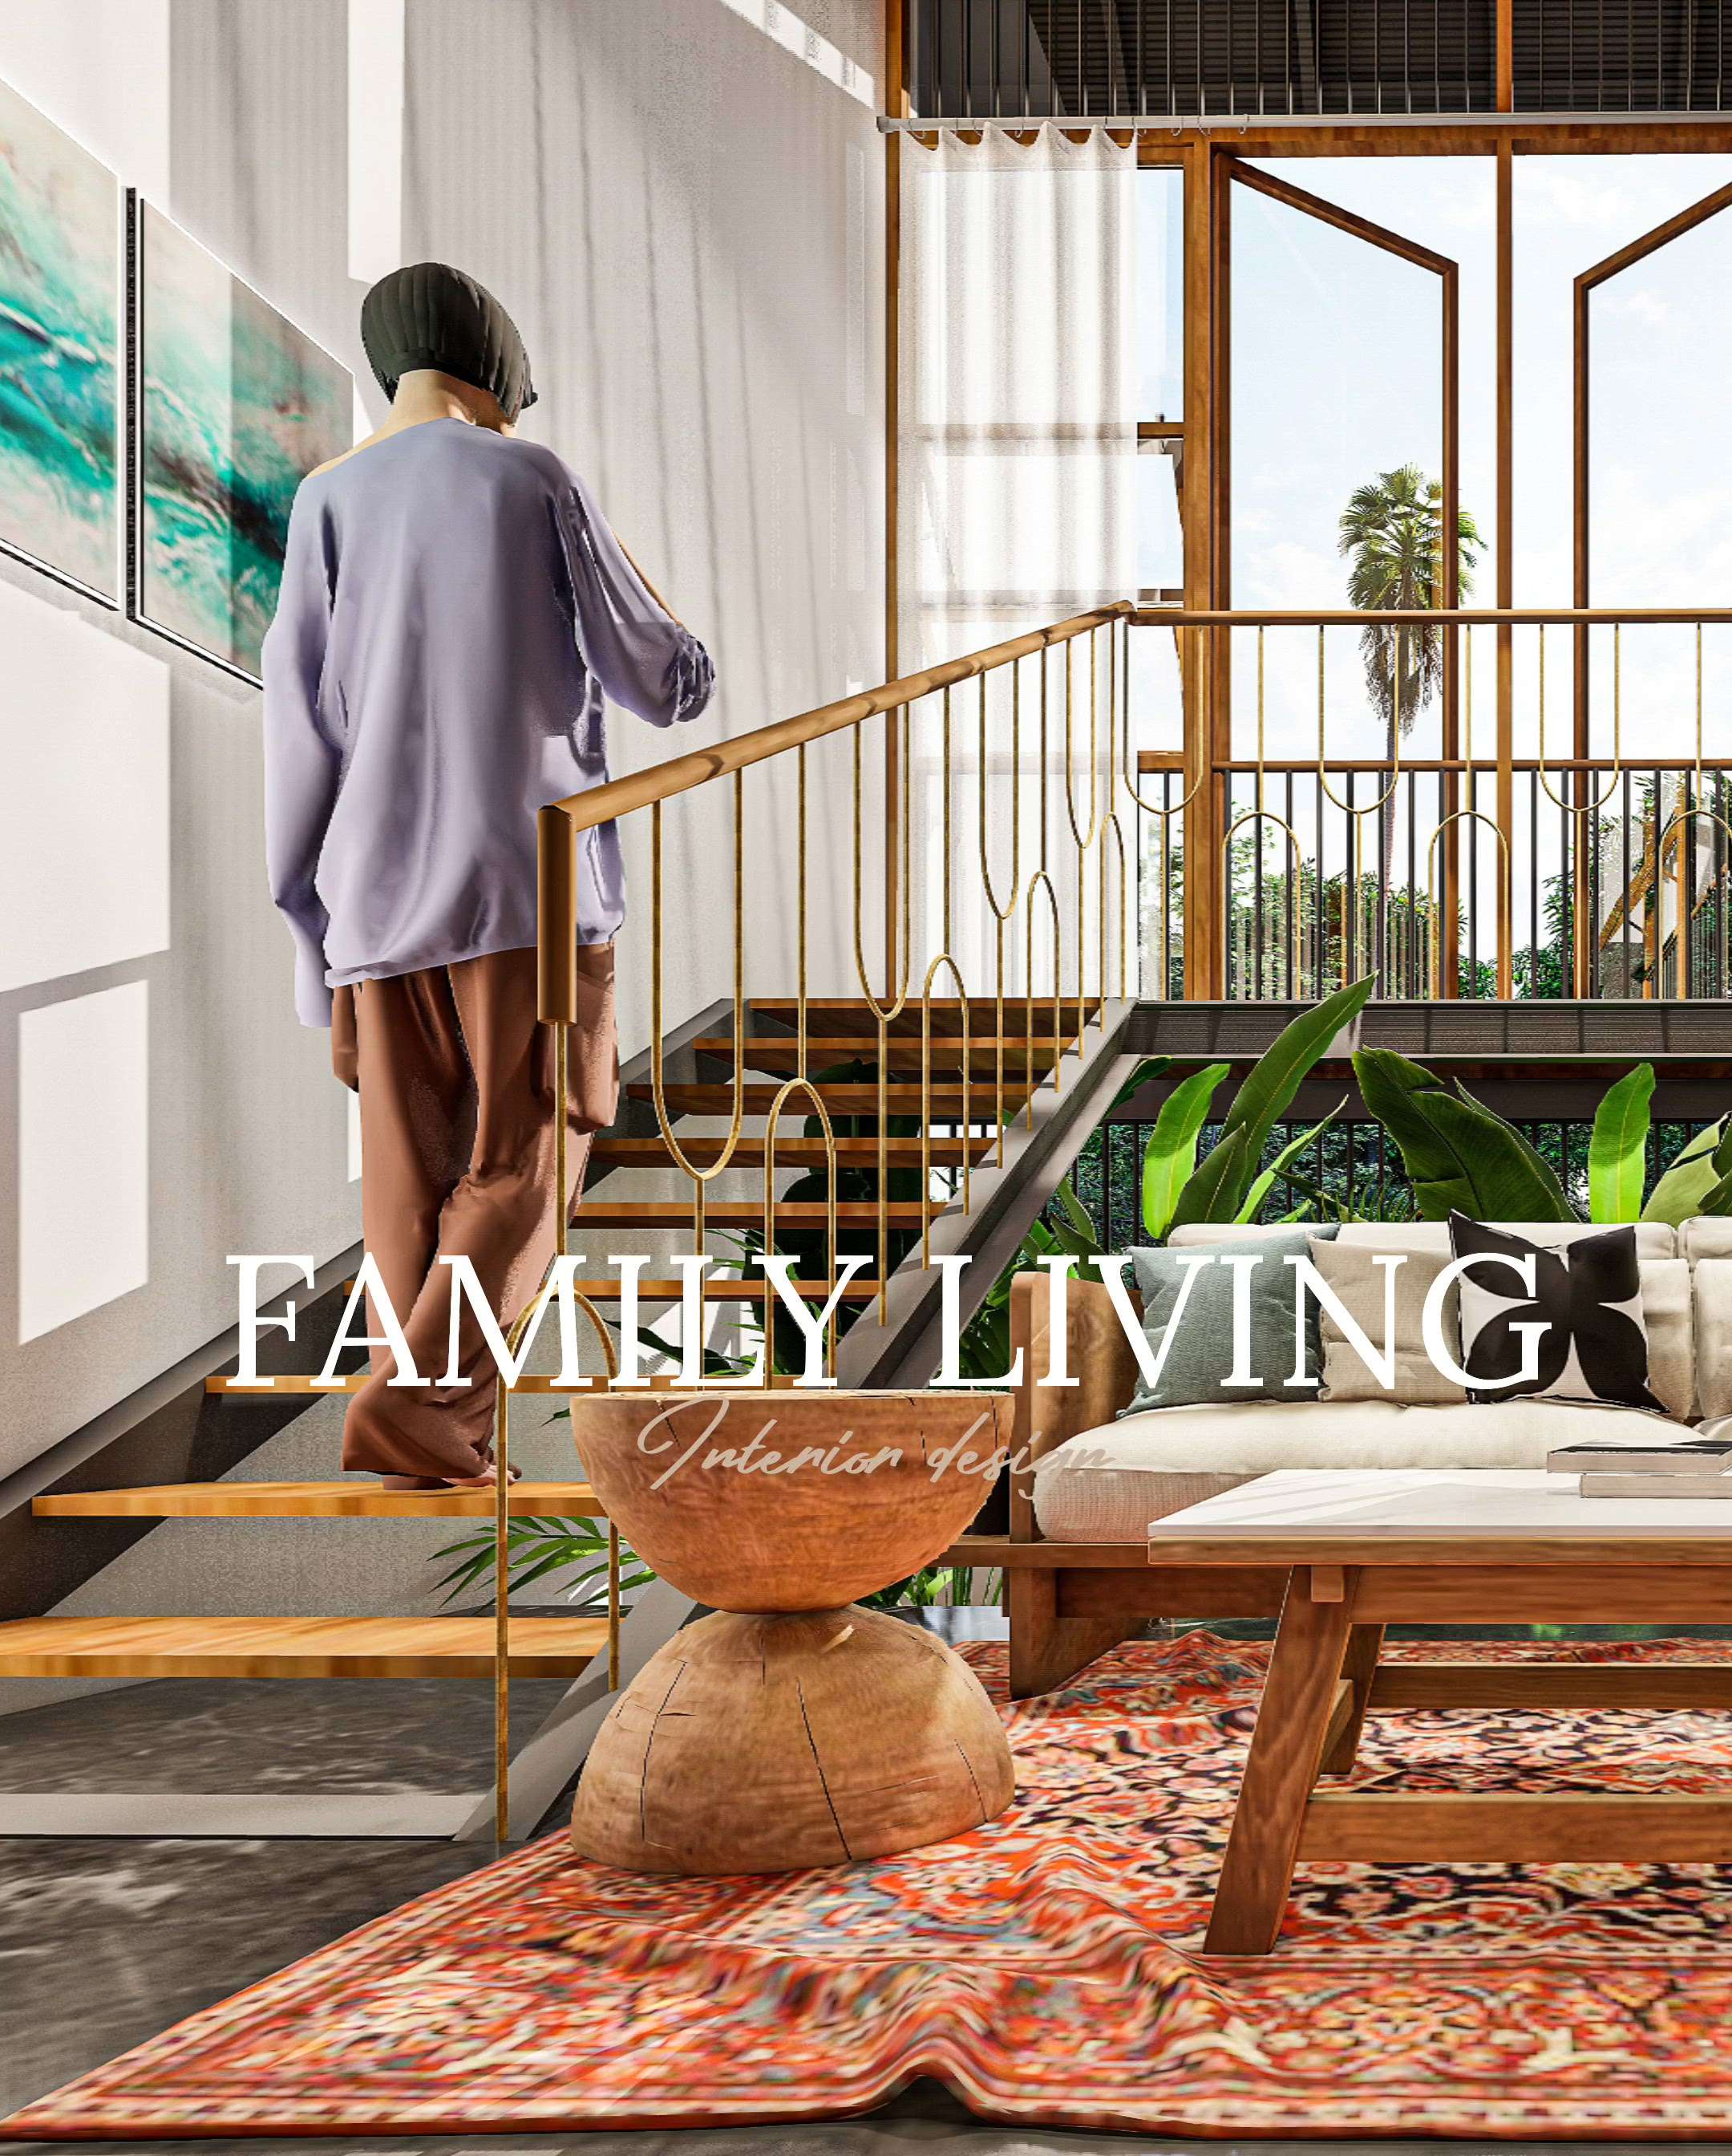 Interior - Family living area
.
.
#FamilyLivingGoals #InteriorElegance #HomeHospitality #DesignInspo #NeutralTones #SofaComfort #SleekDesign #HomeAwayFromHome #InteriorChic #HospitalityDesign"